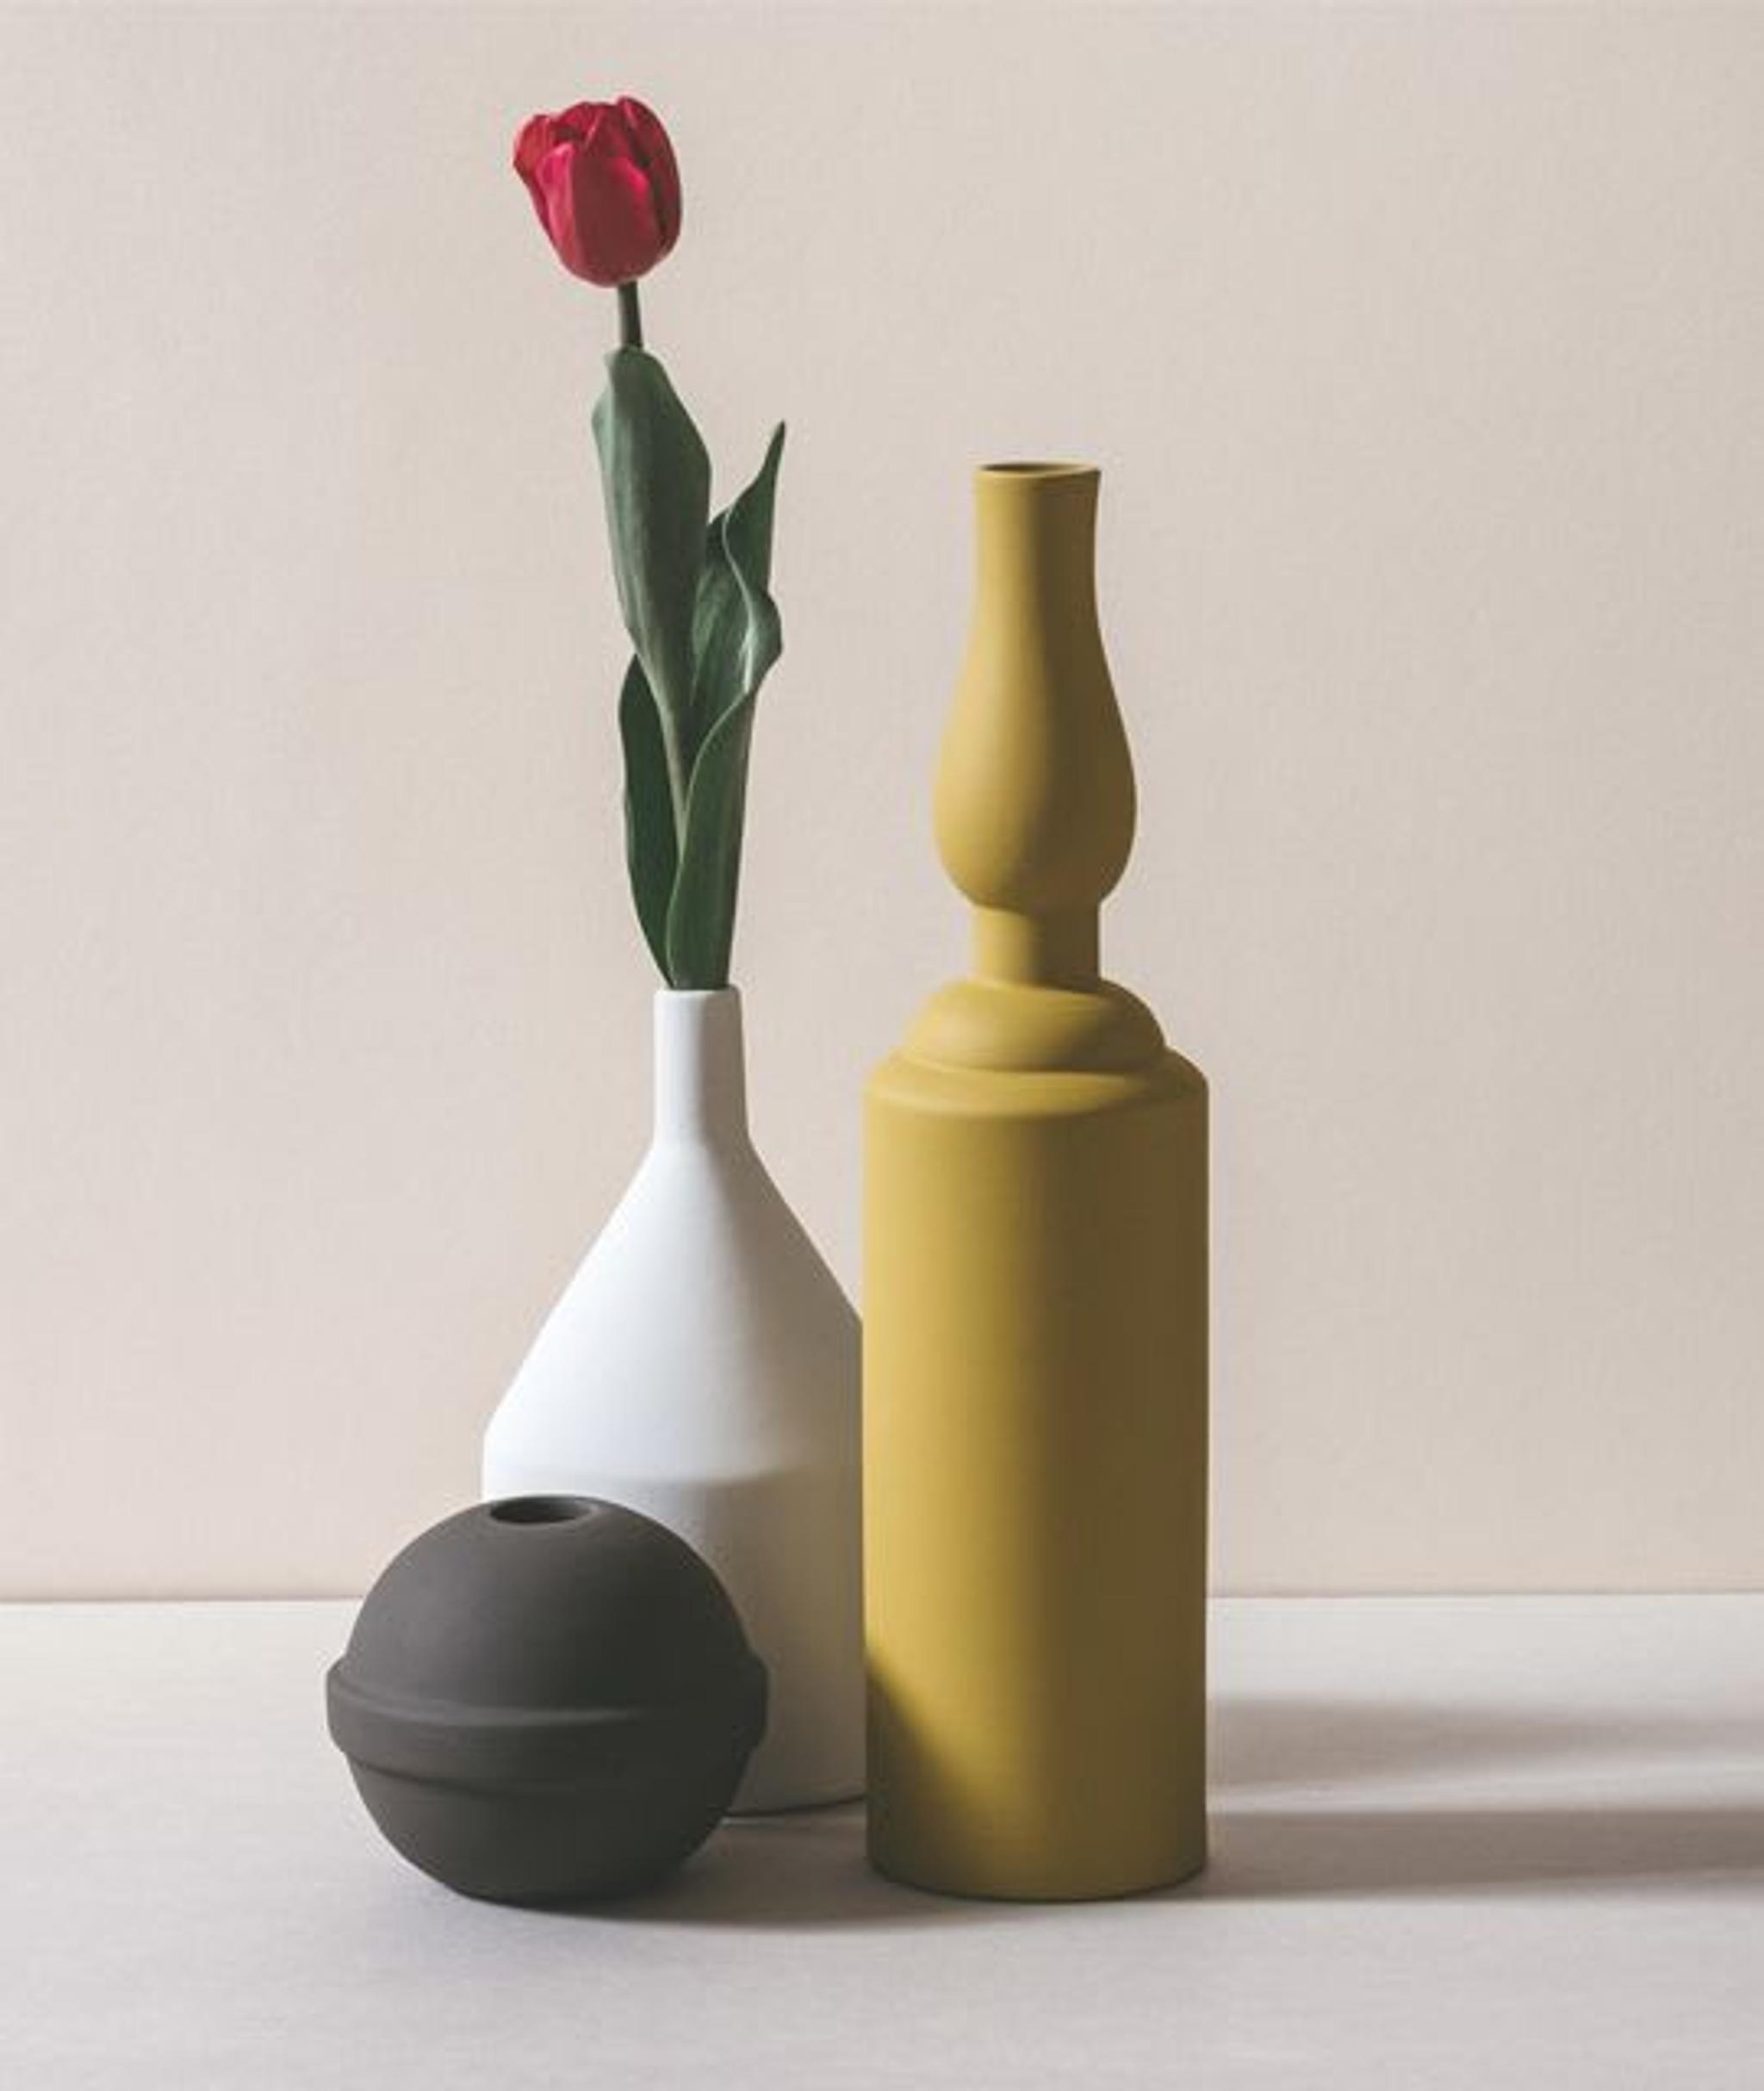 Natura Morta 3 - Vase Set #2 par Sonia Pedrazzini